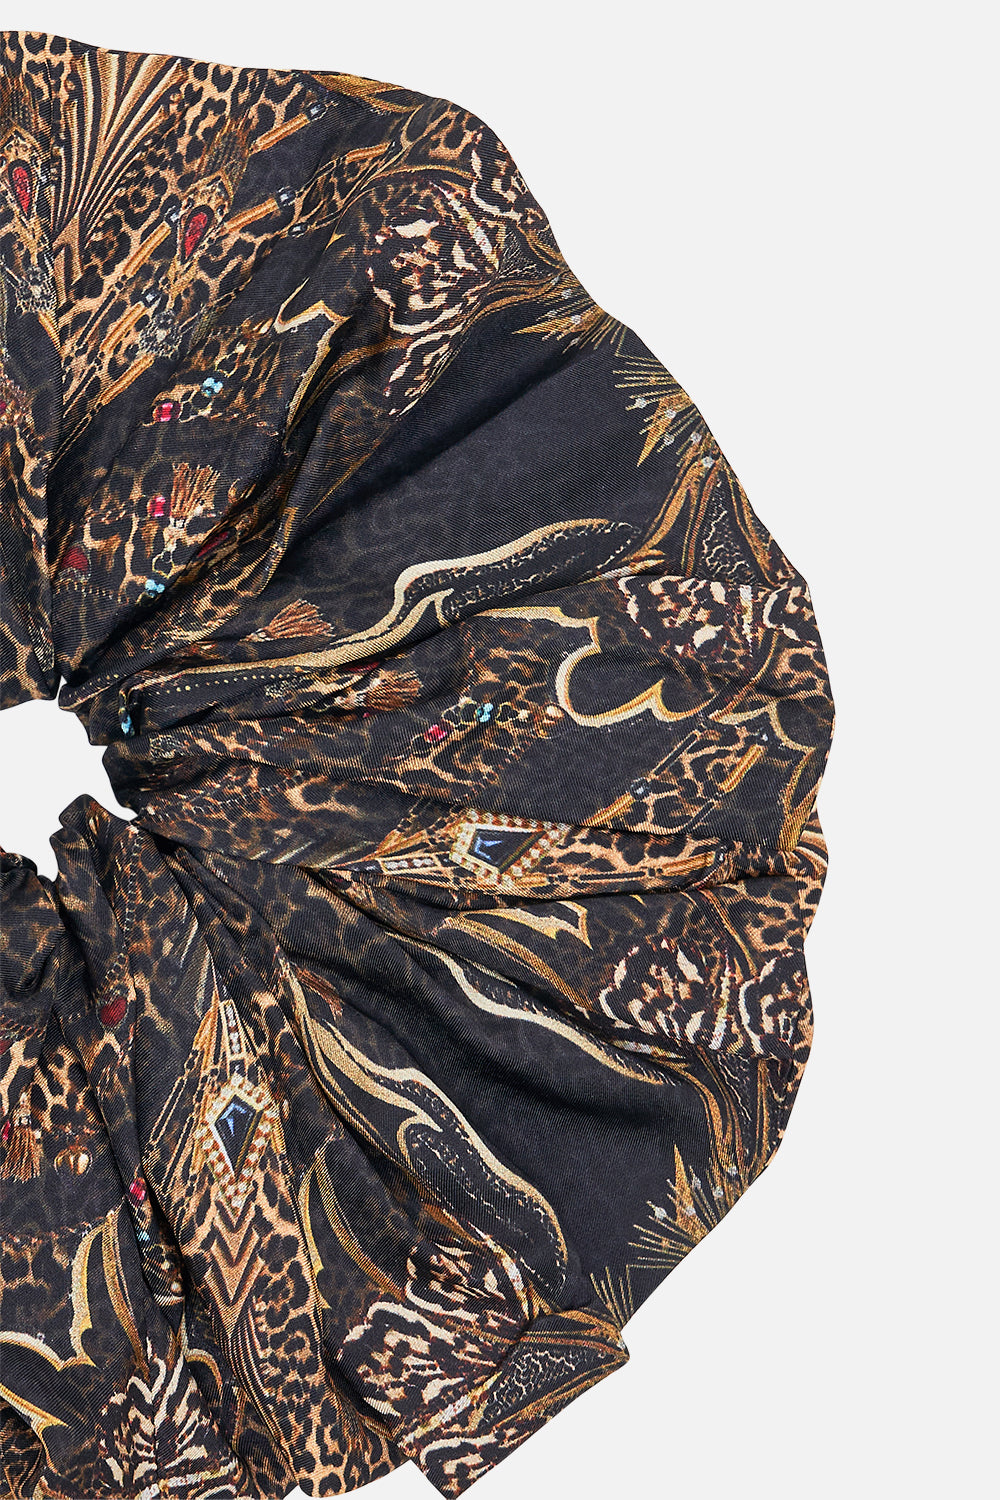 CAMILLA oversized scrunchie in Amsterglam print